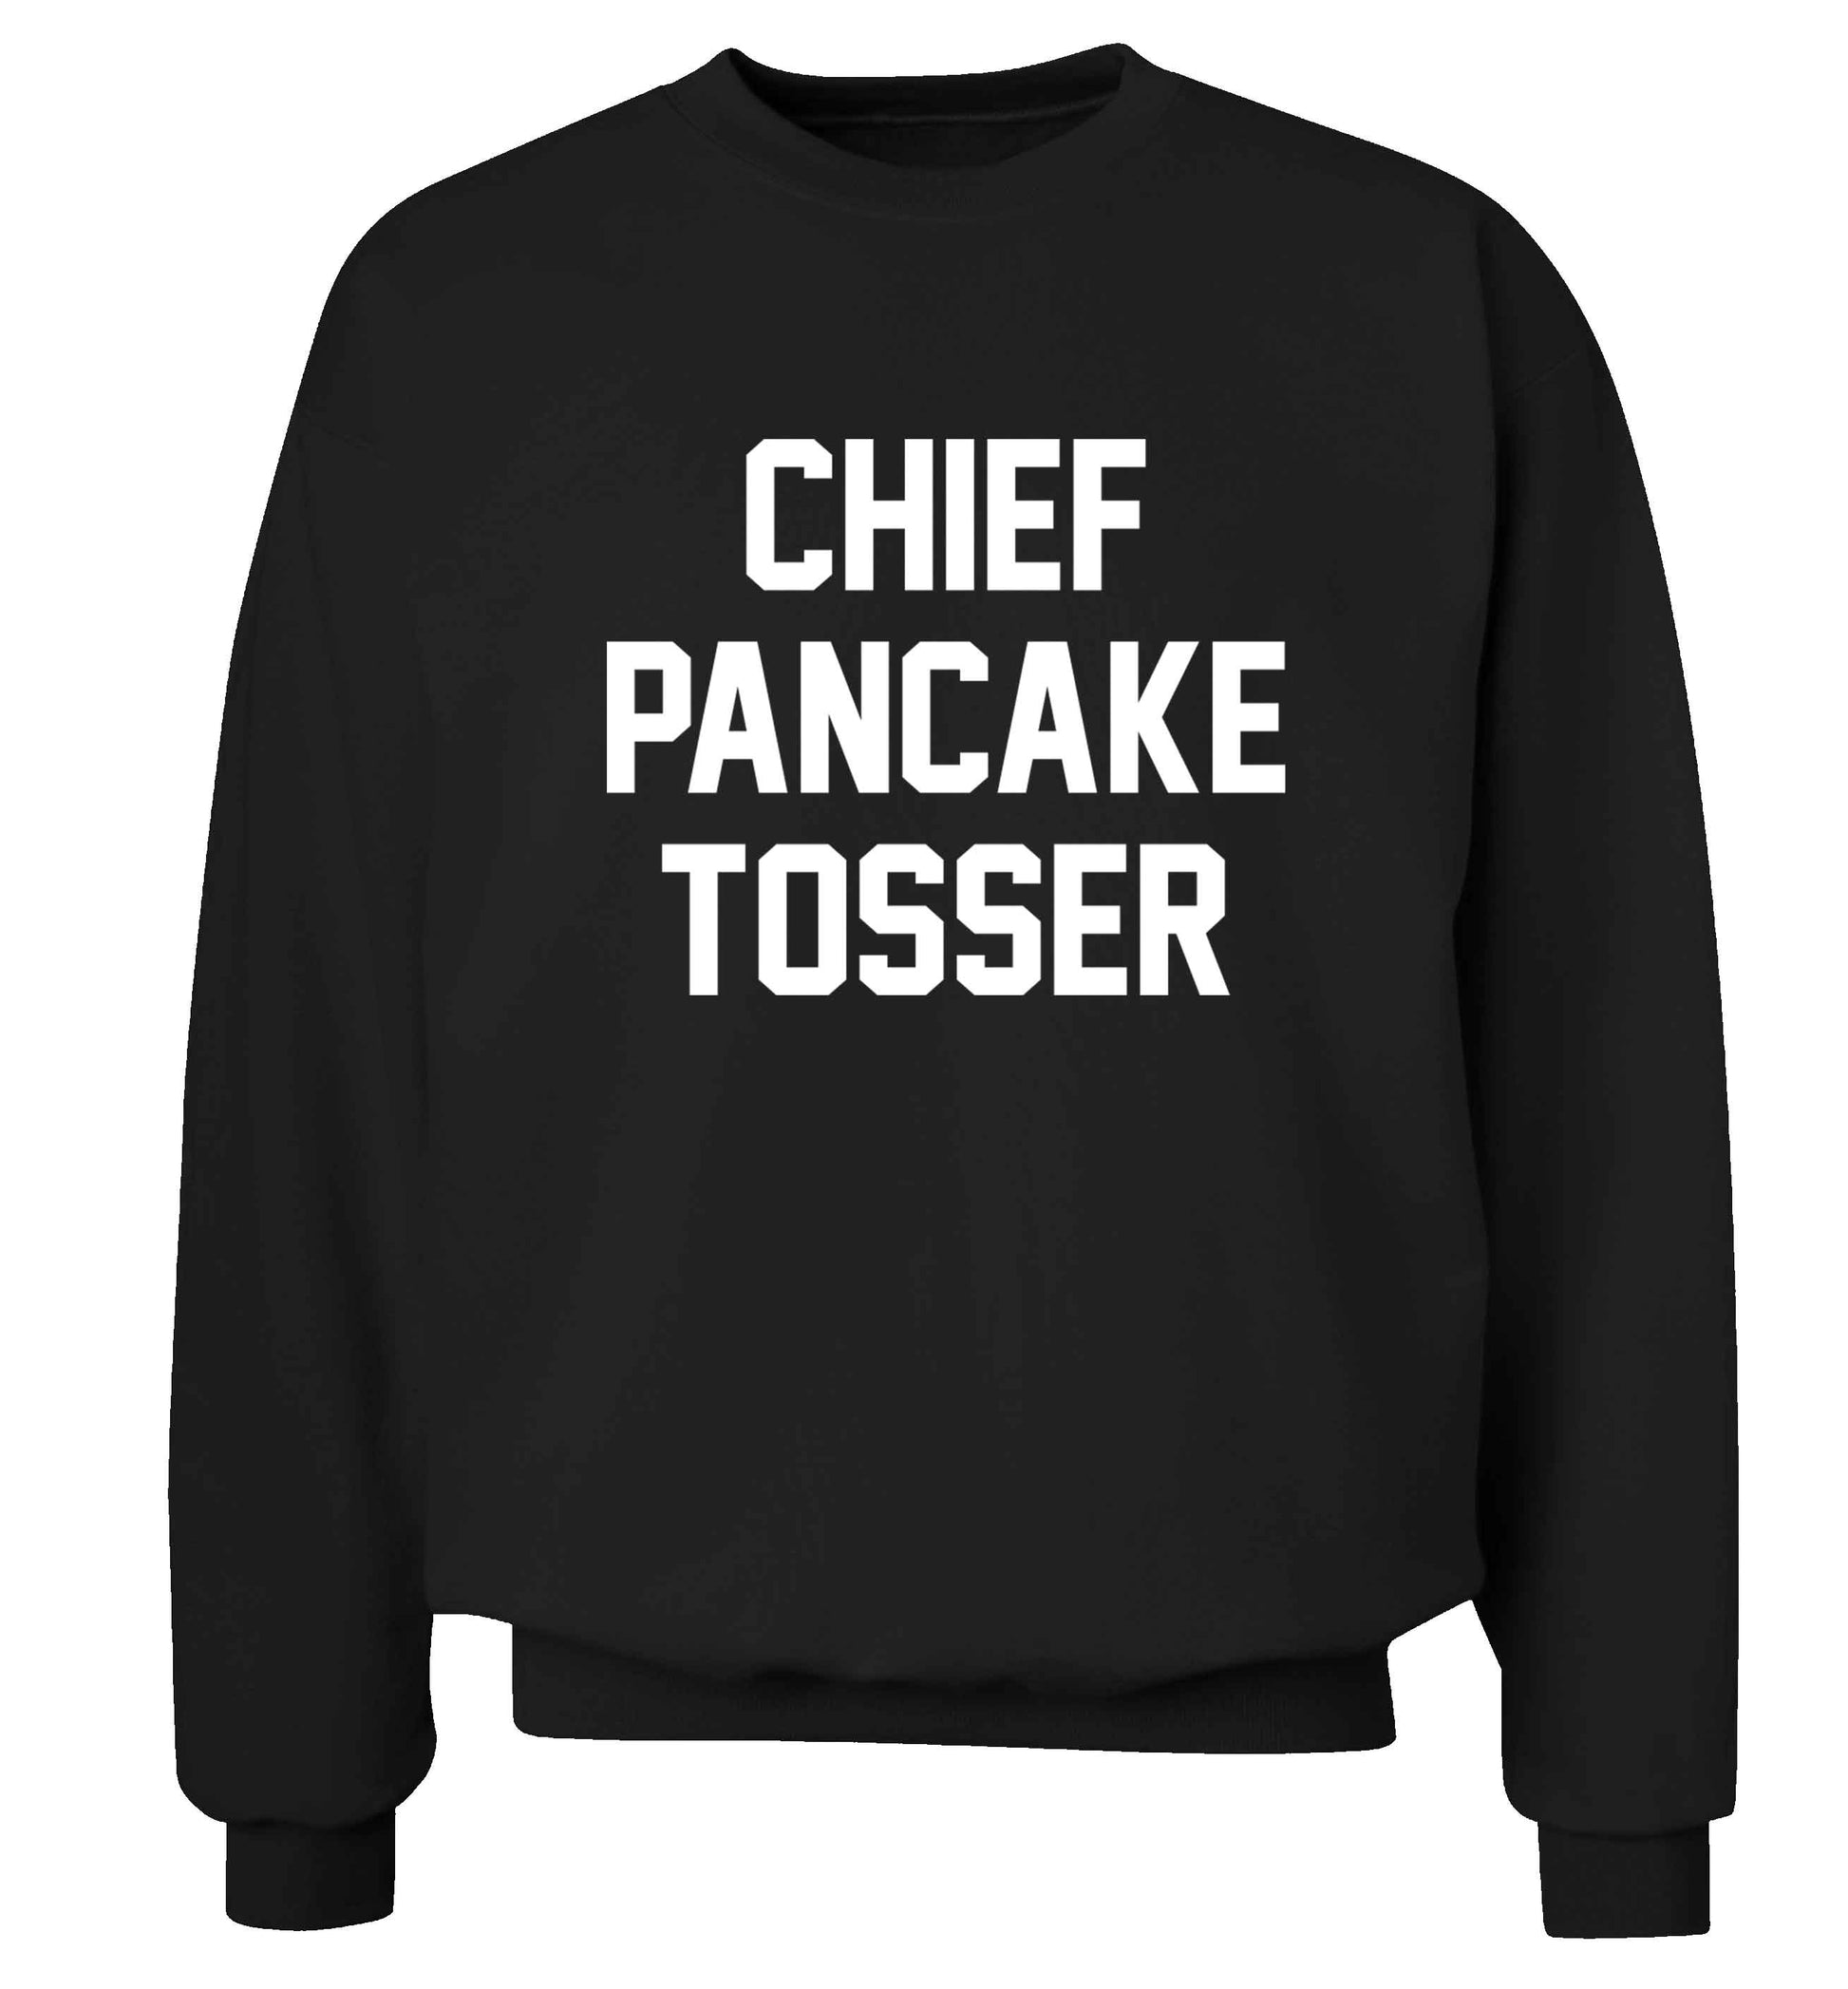 Chief pancake tosser adult's unisex black sweater 2XL